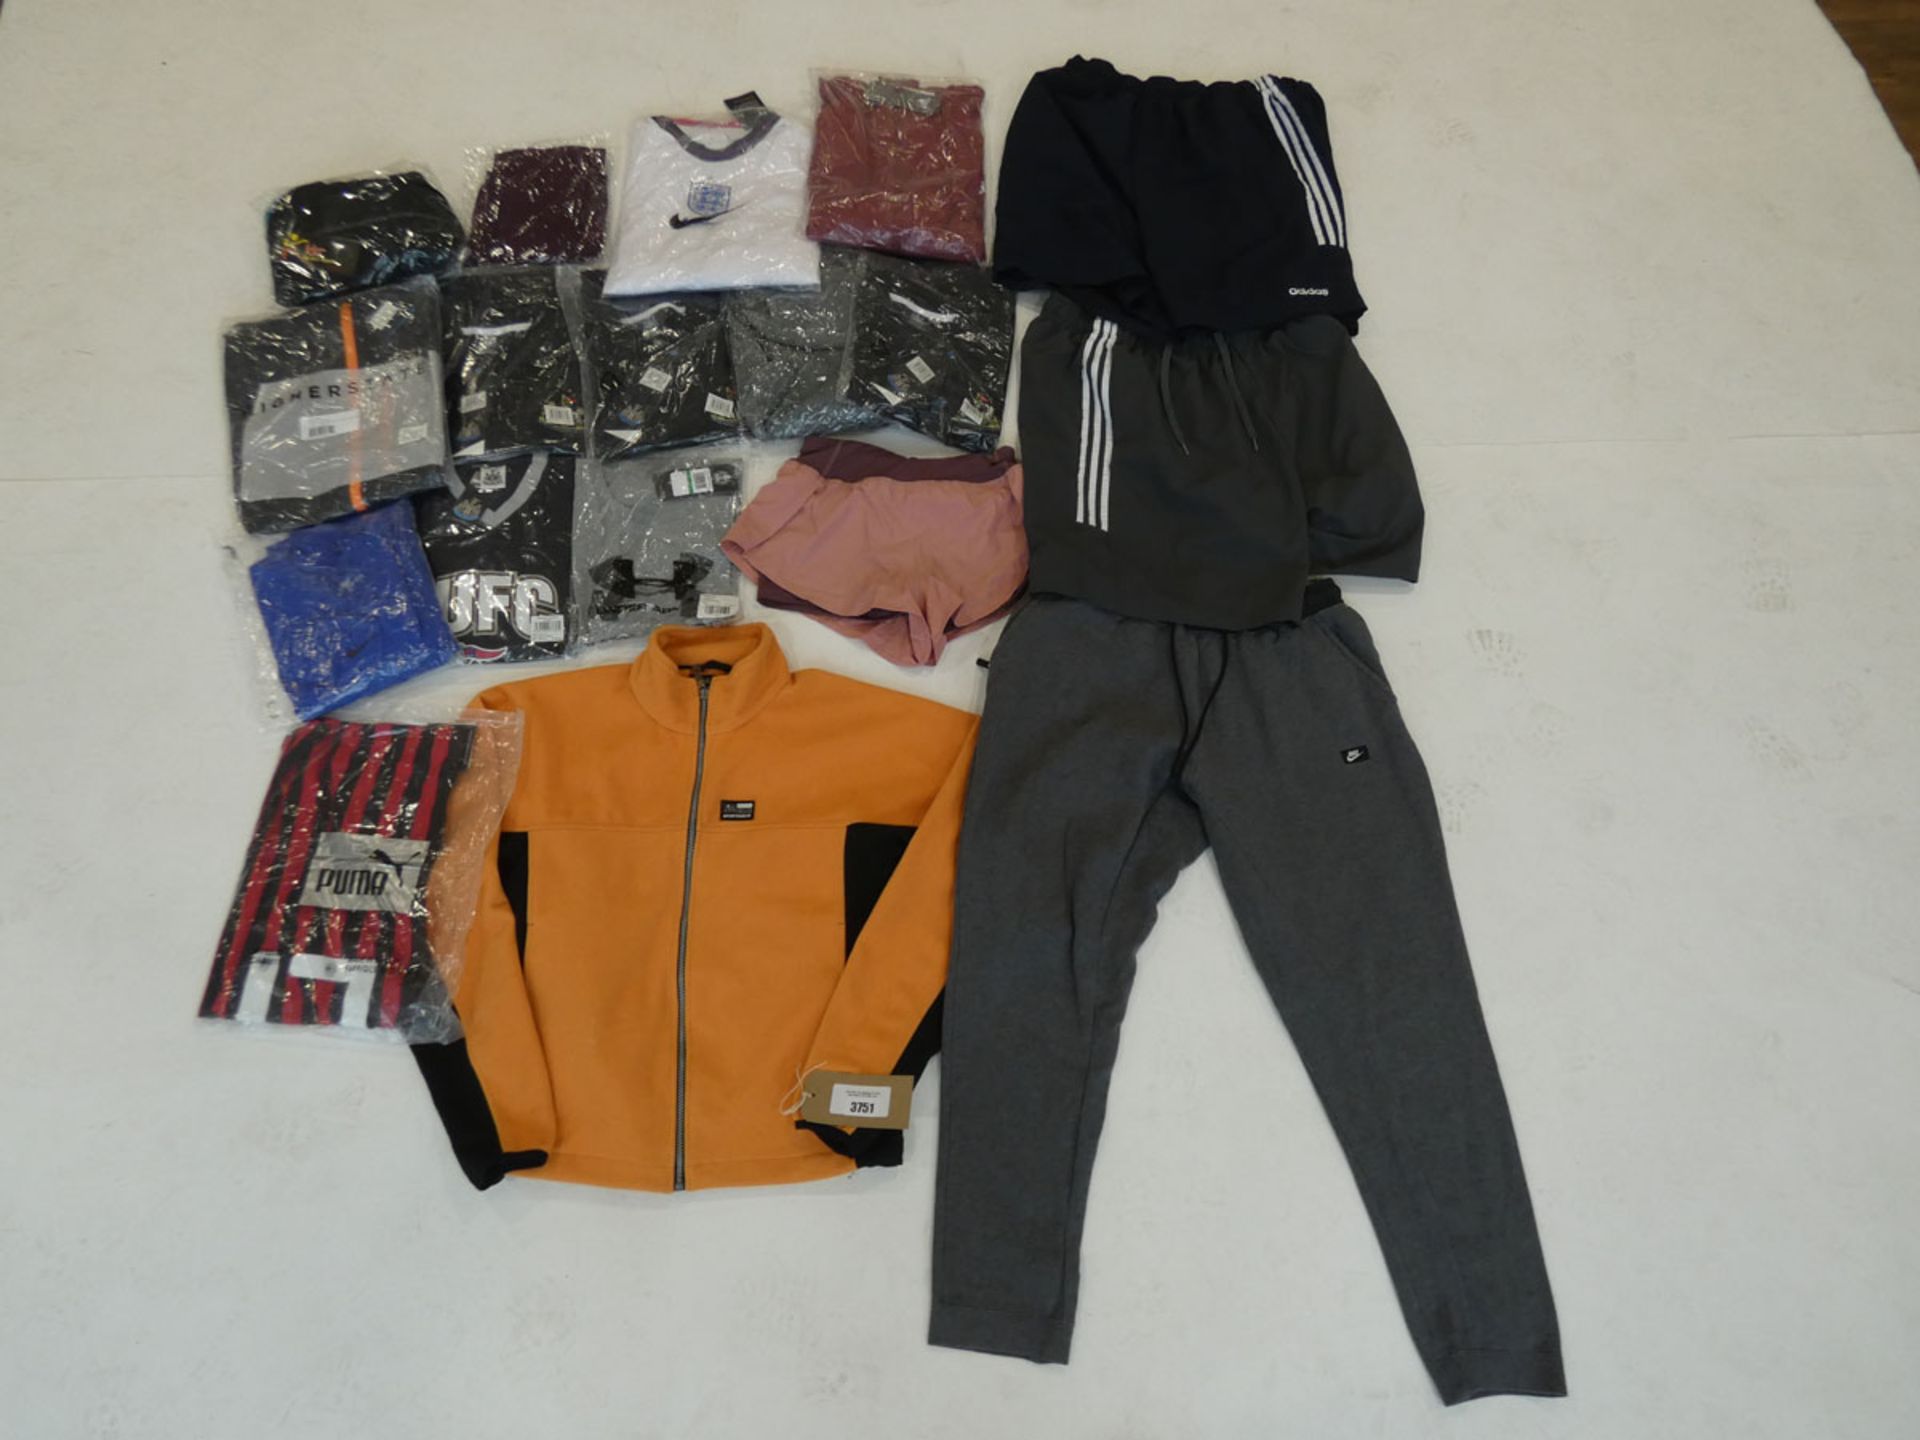 Selection of sportswear to include Aidas, Puma, Nike, Under Armour, etc